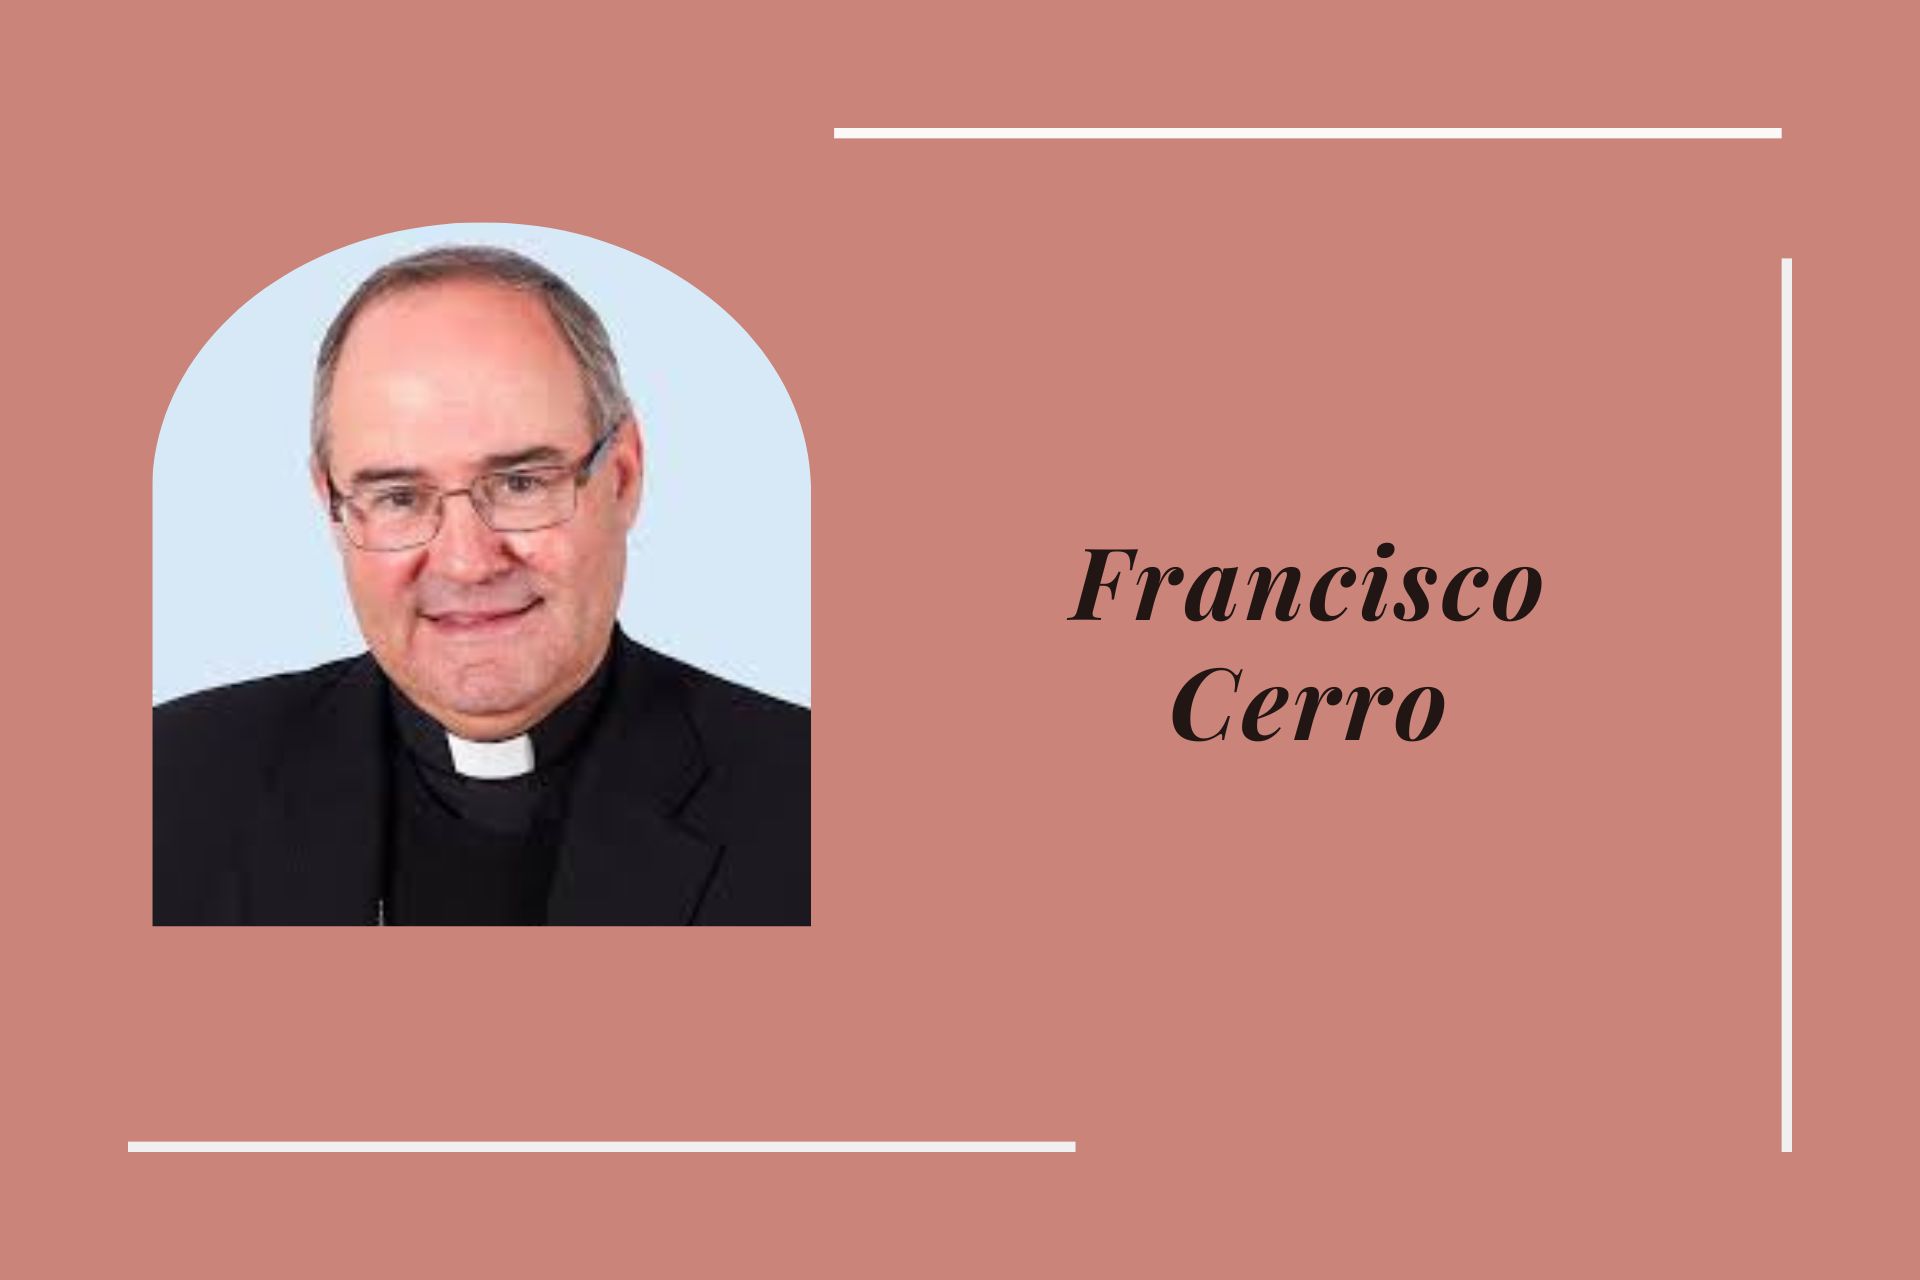 Francisco Cerro